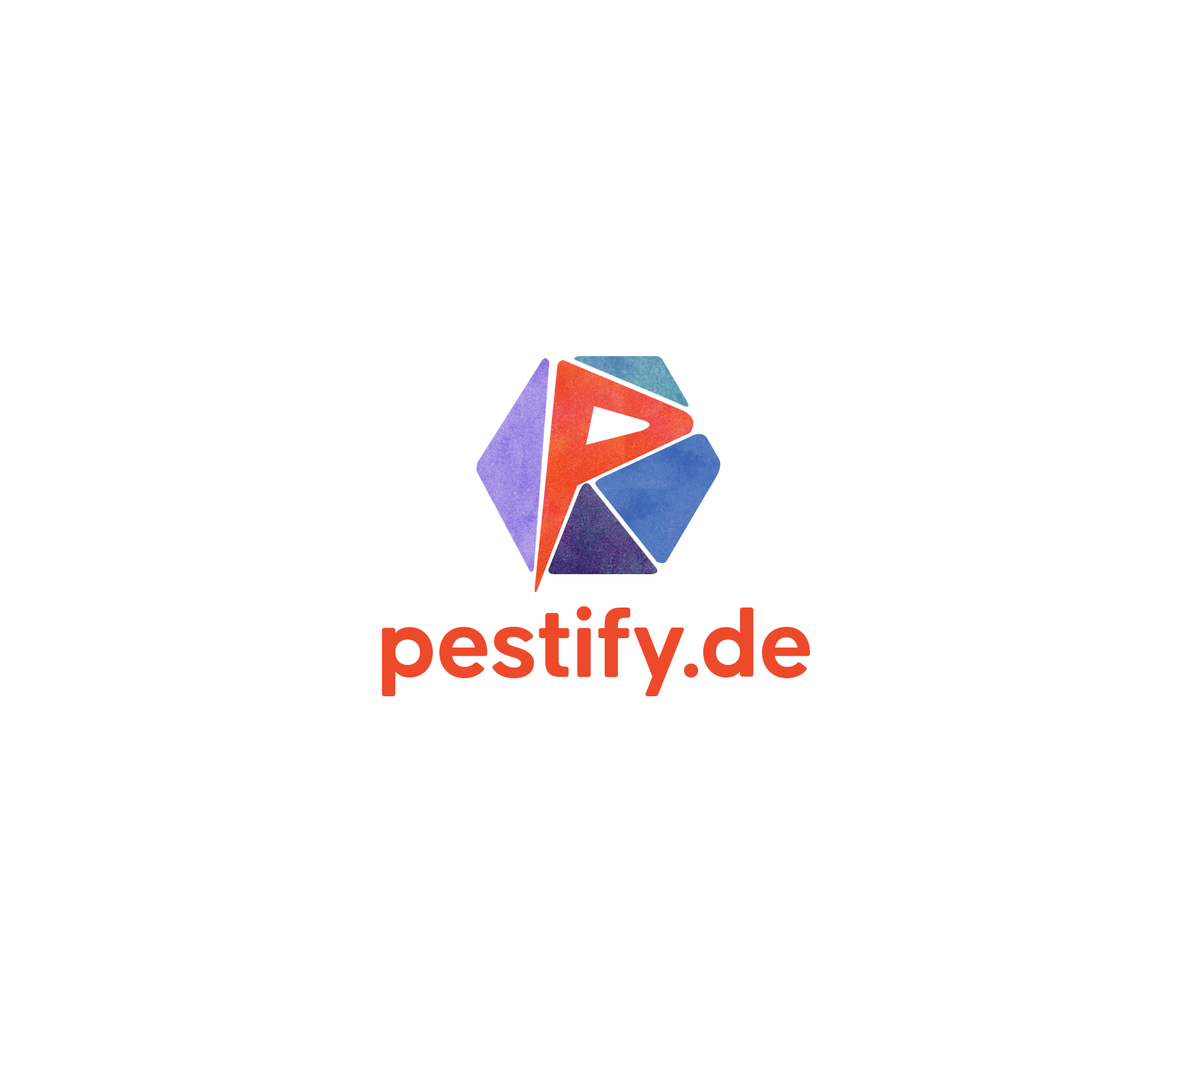 (c) Pestify.de